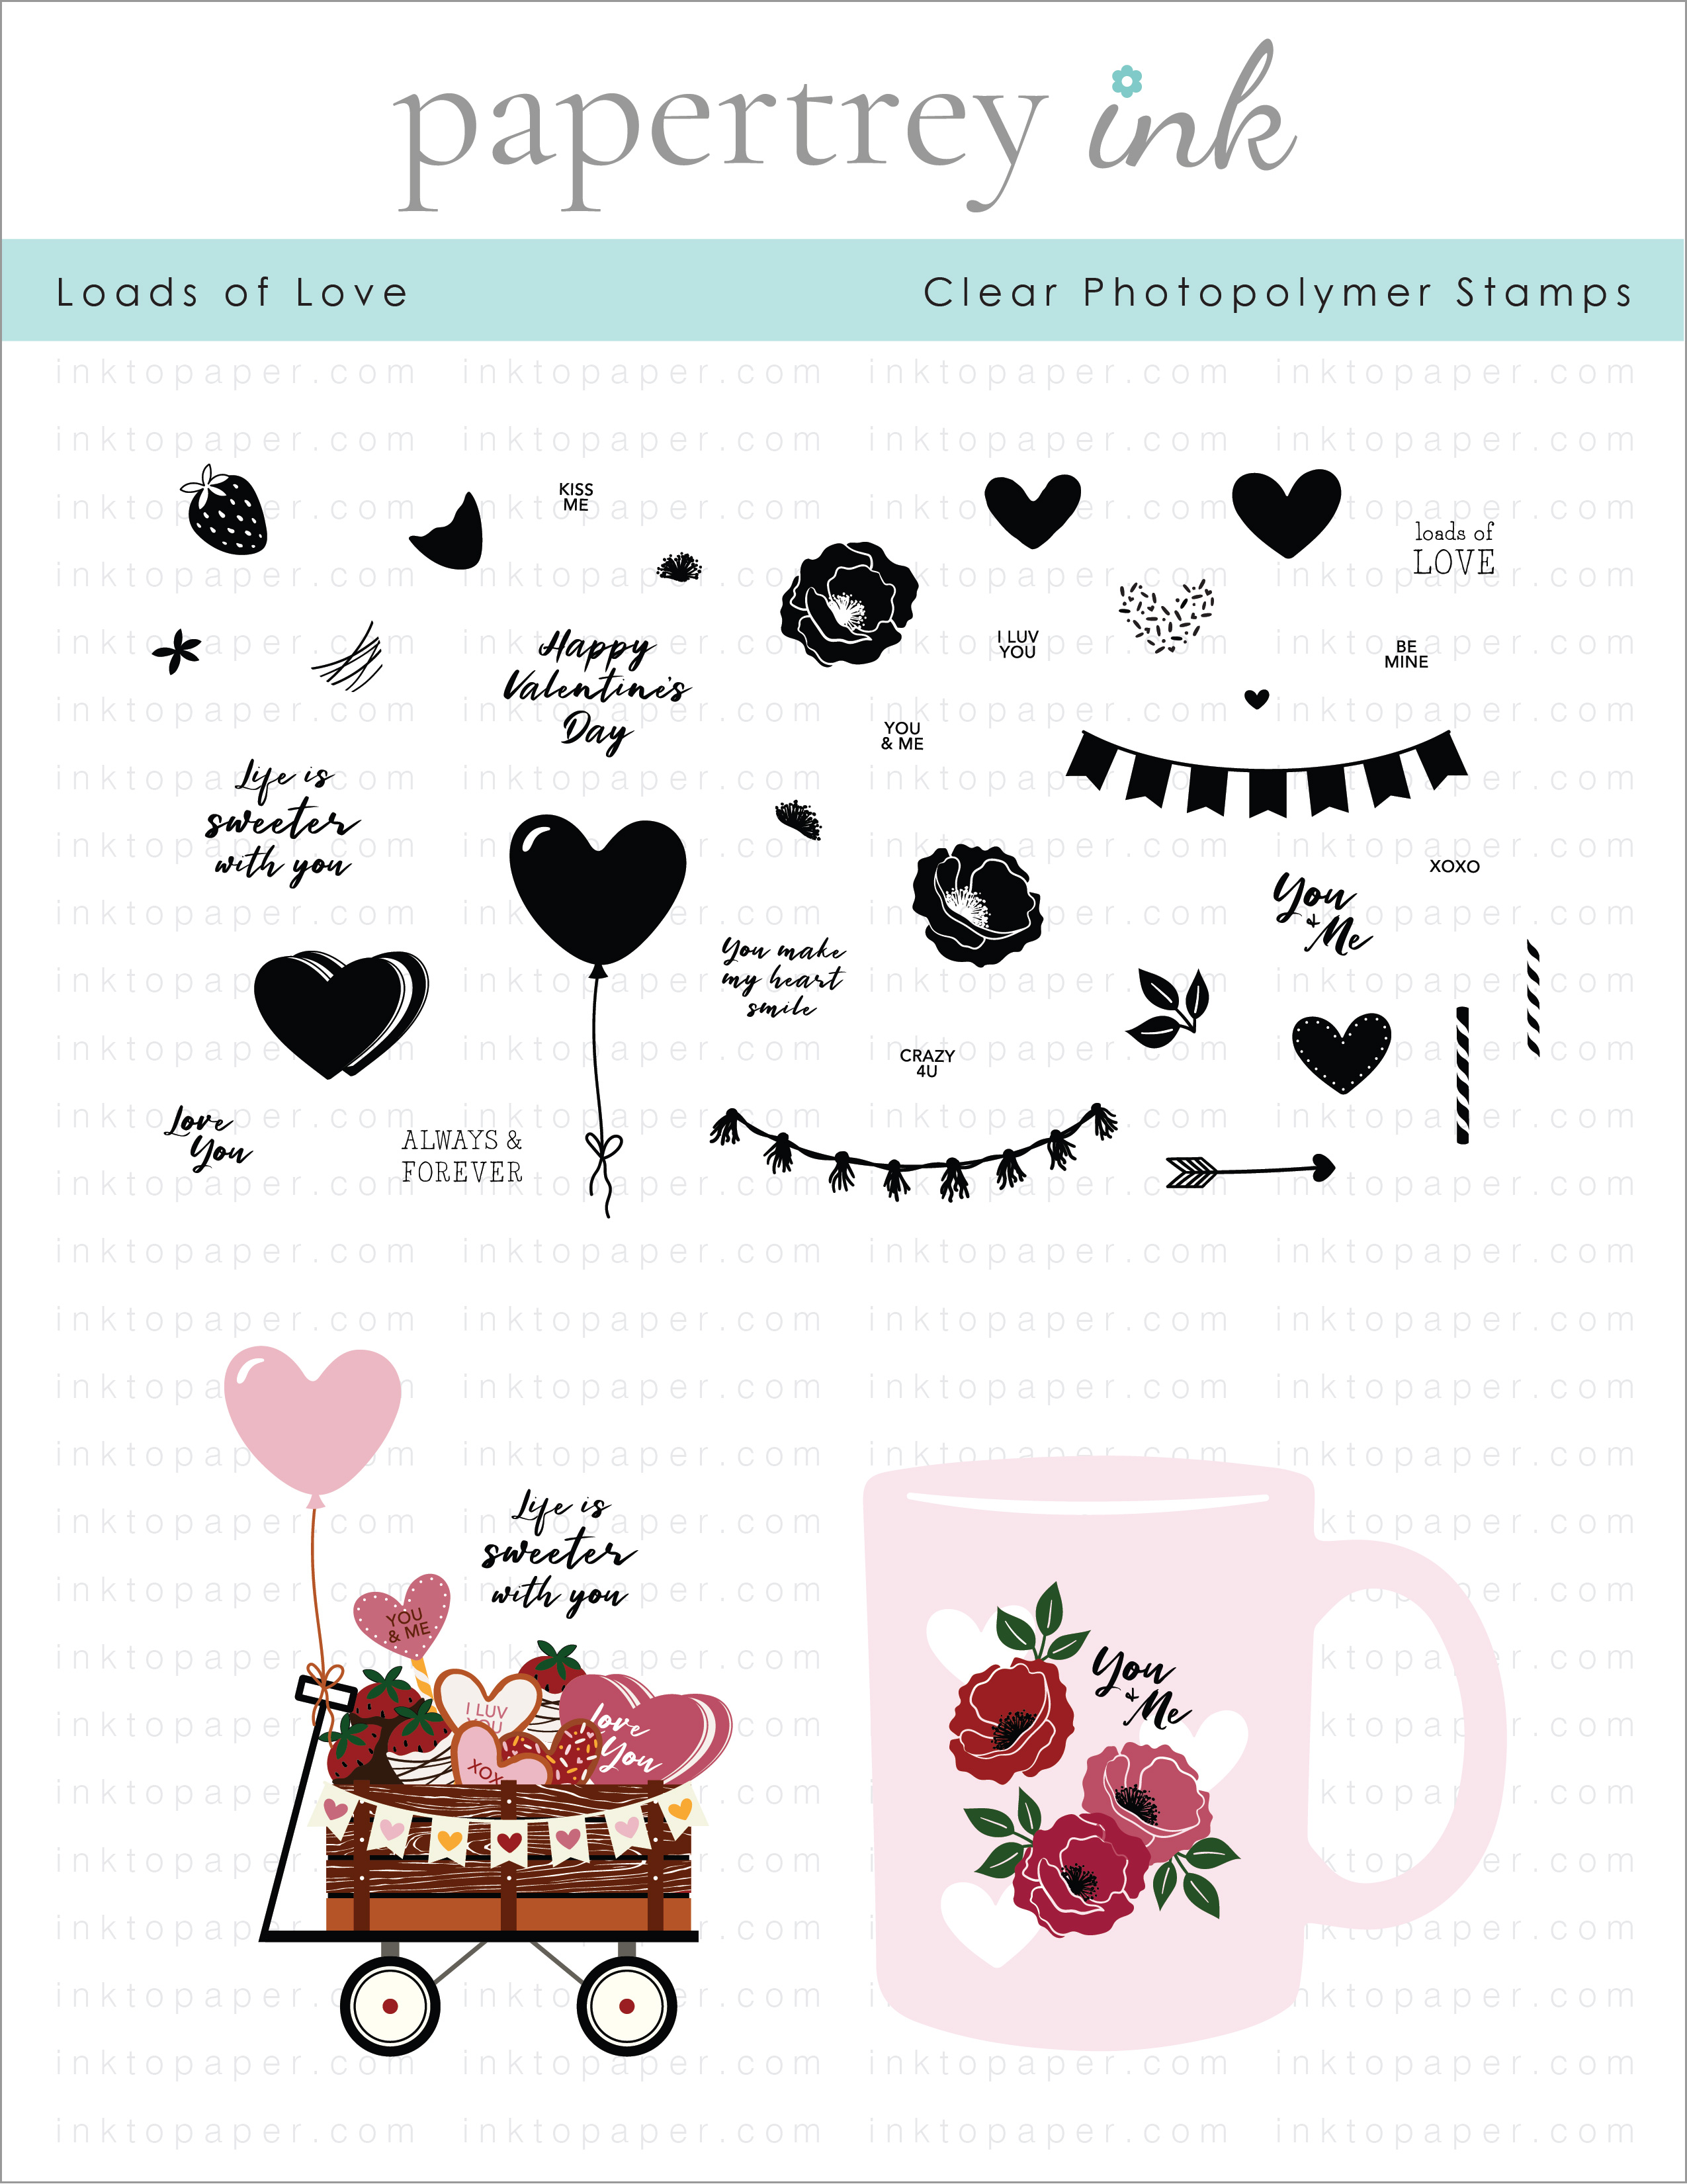 Loads of Love Stamp Set: Papertrey Ink